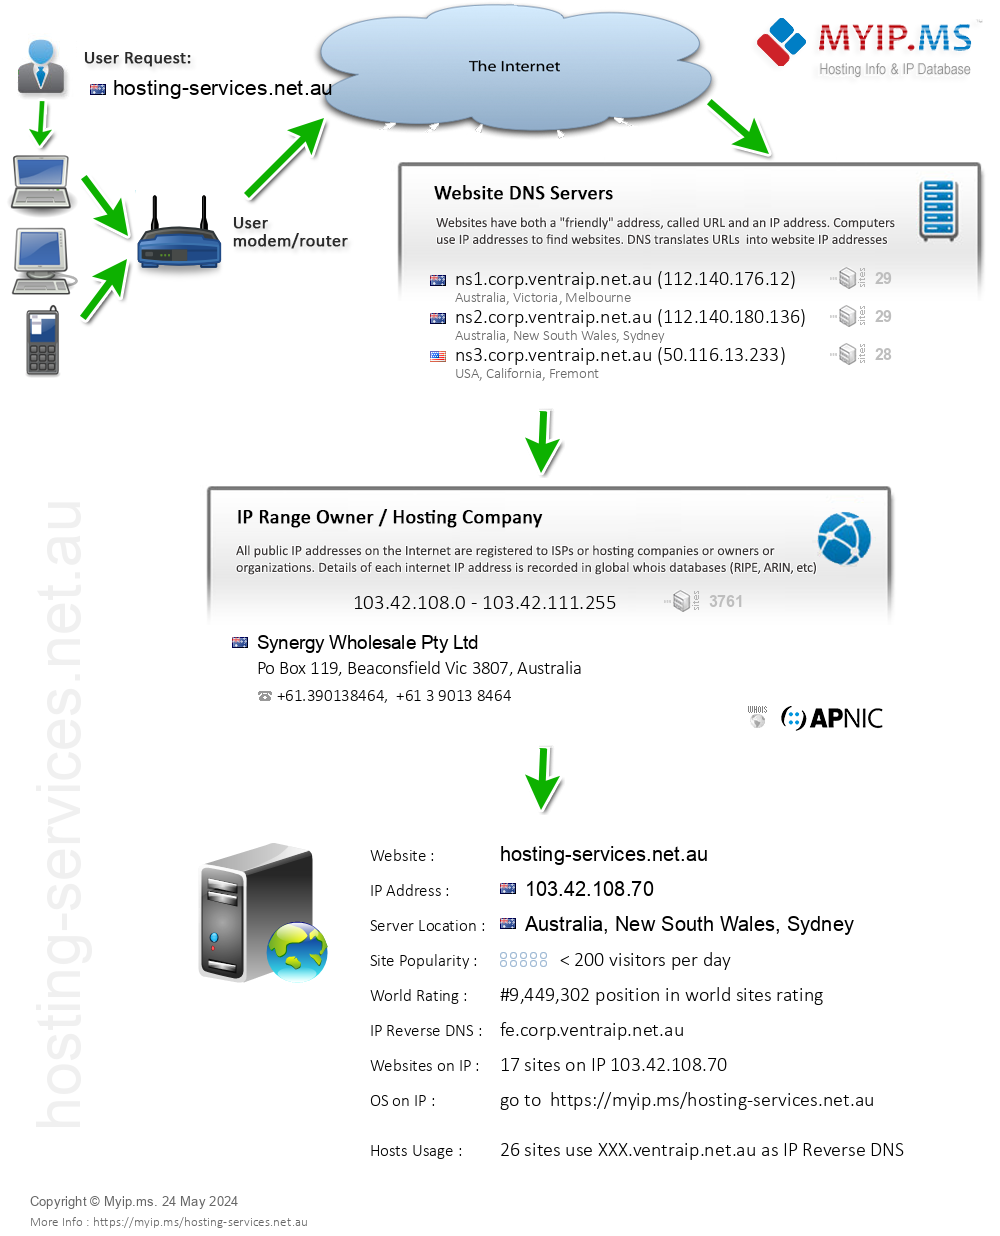 Hosting-services.net.au - Website Hosting Visual IP Diagram